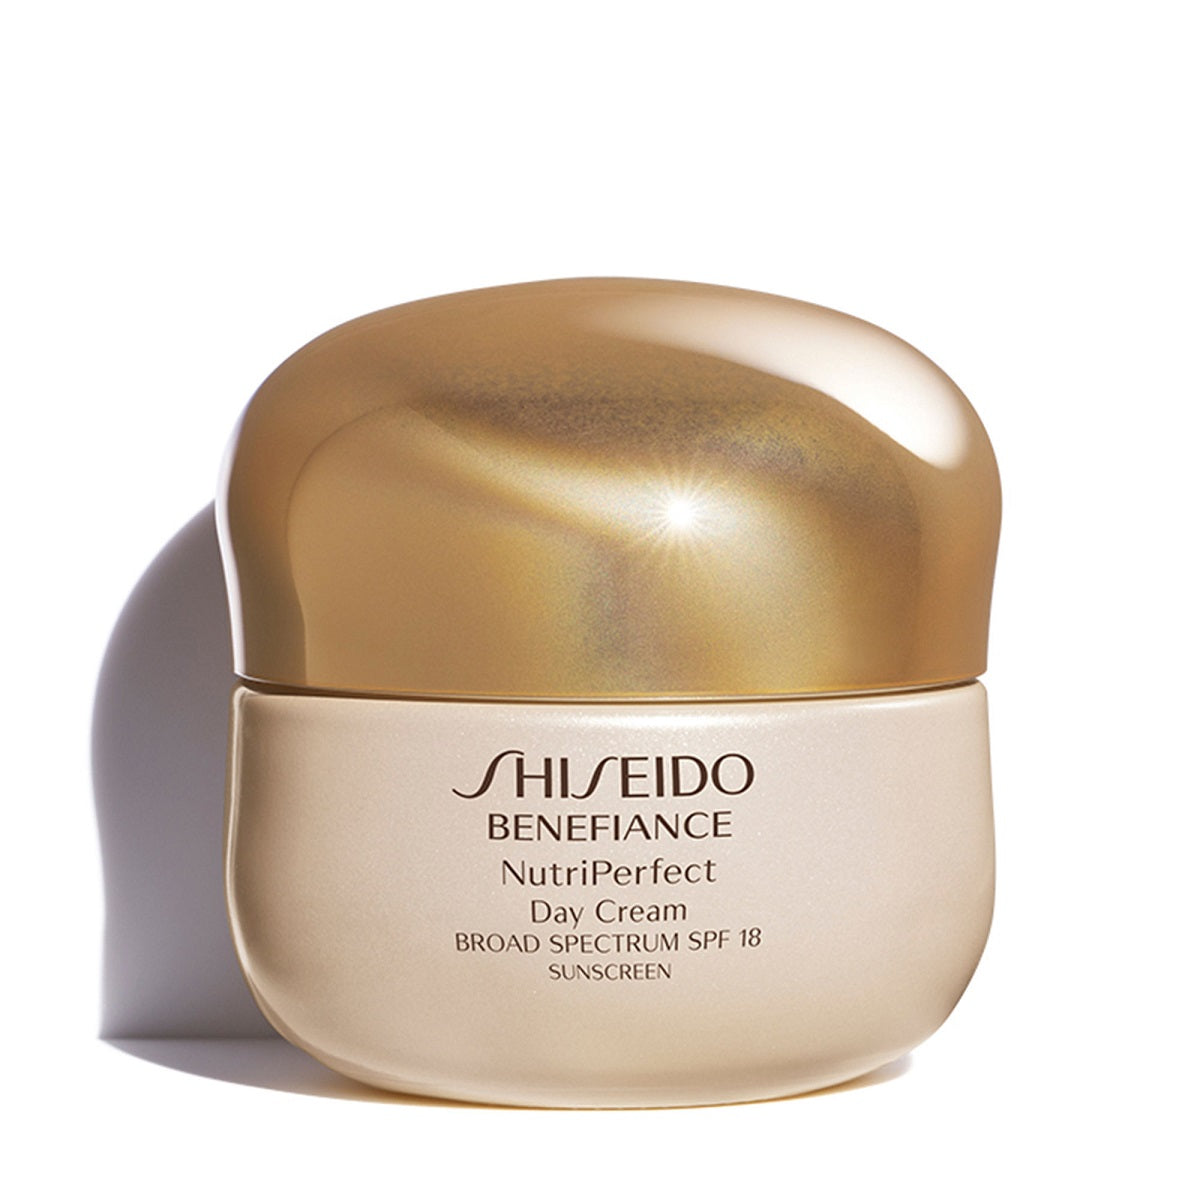 Shiseido Benefiance Nutriperfect Day Cream SPF 15.